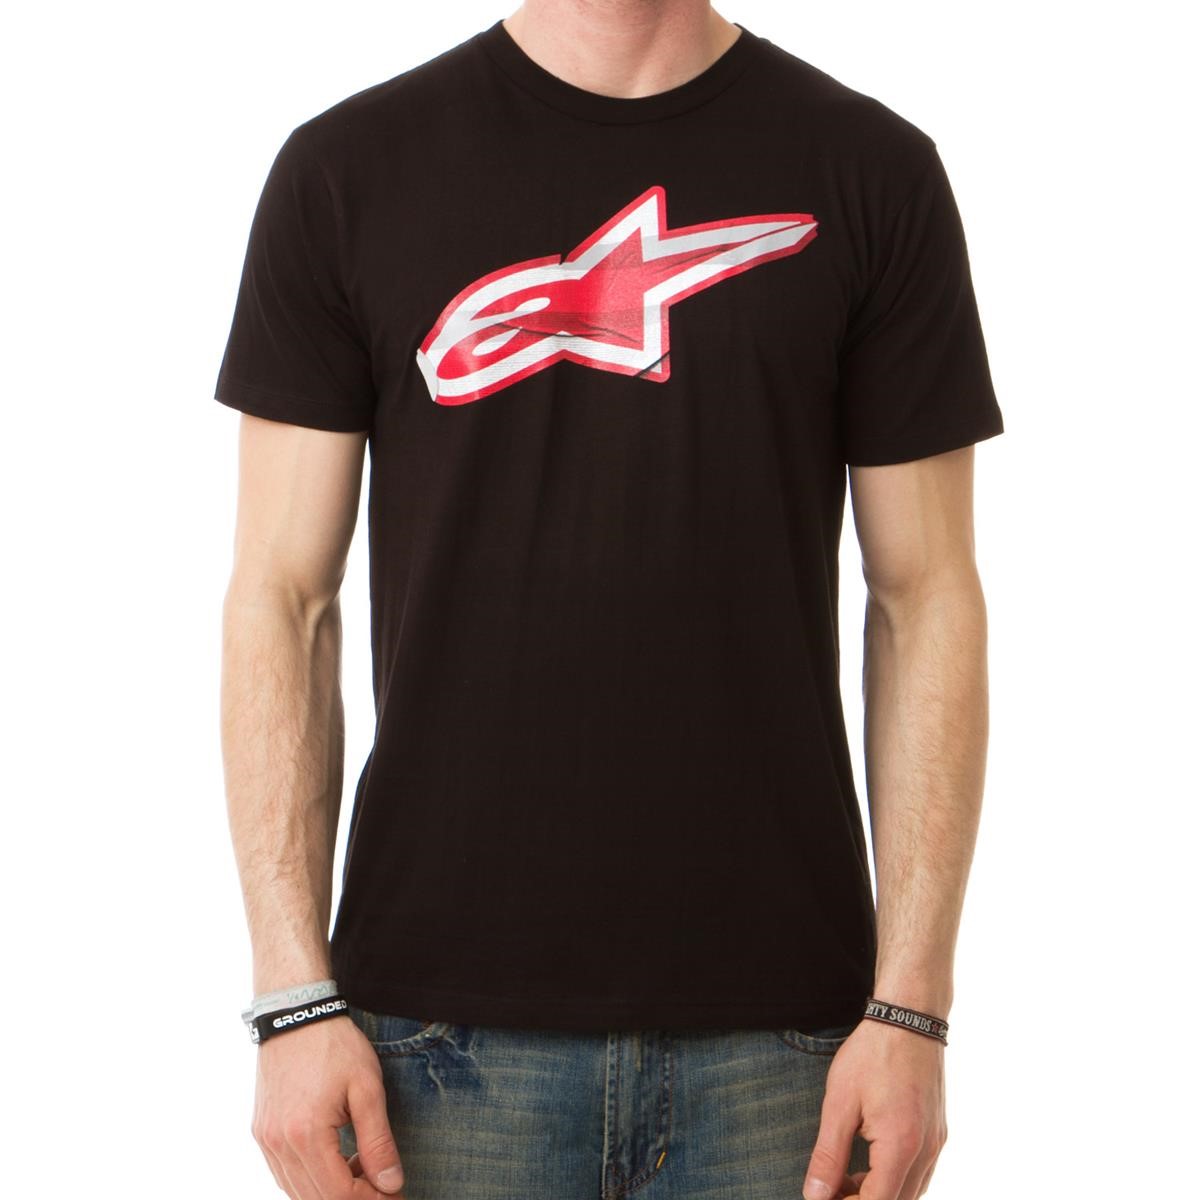 Freizeit/Streetwear Bekleidung-T-Shirts/Polos - Alpinestars T-Shirt Sticky Black